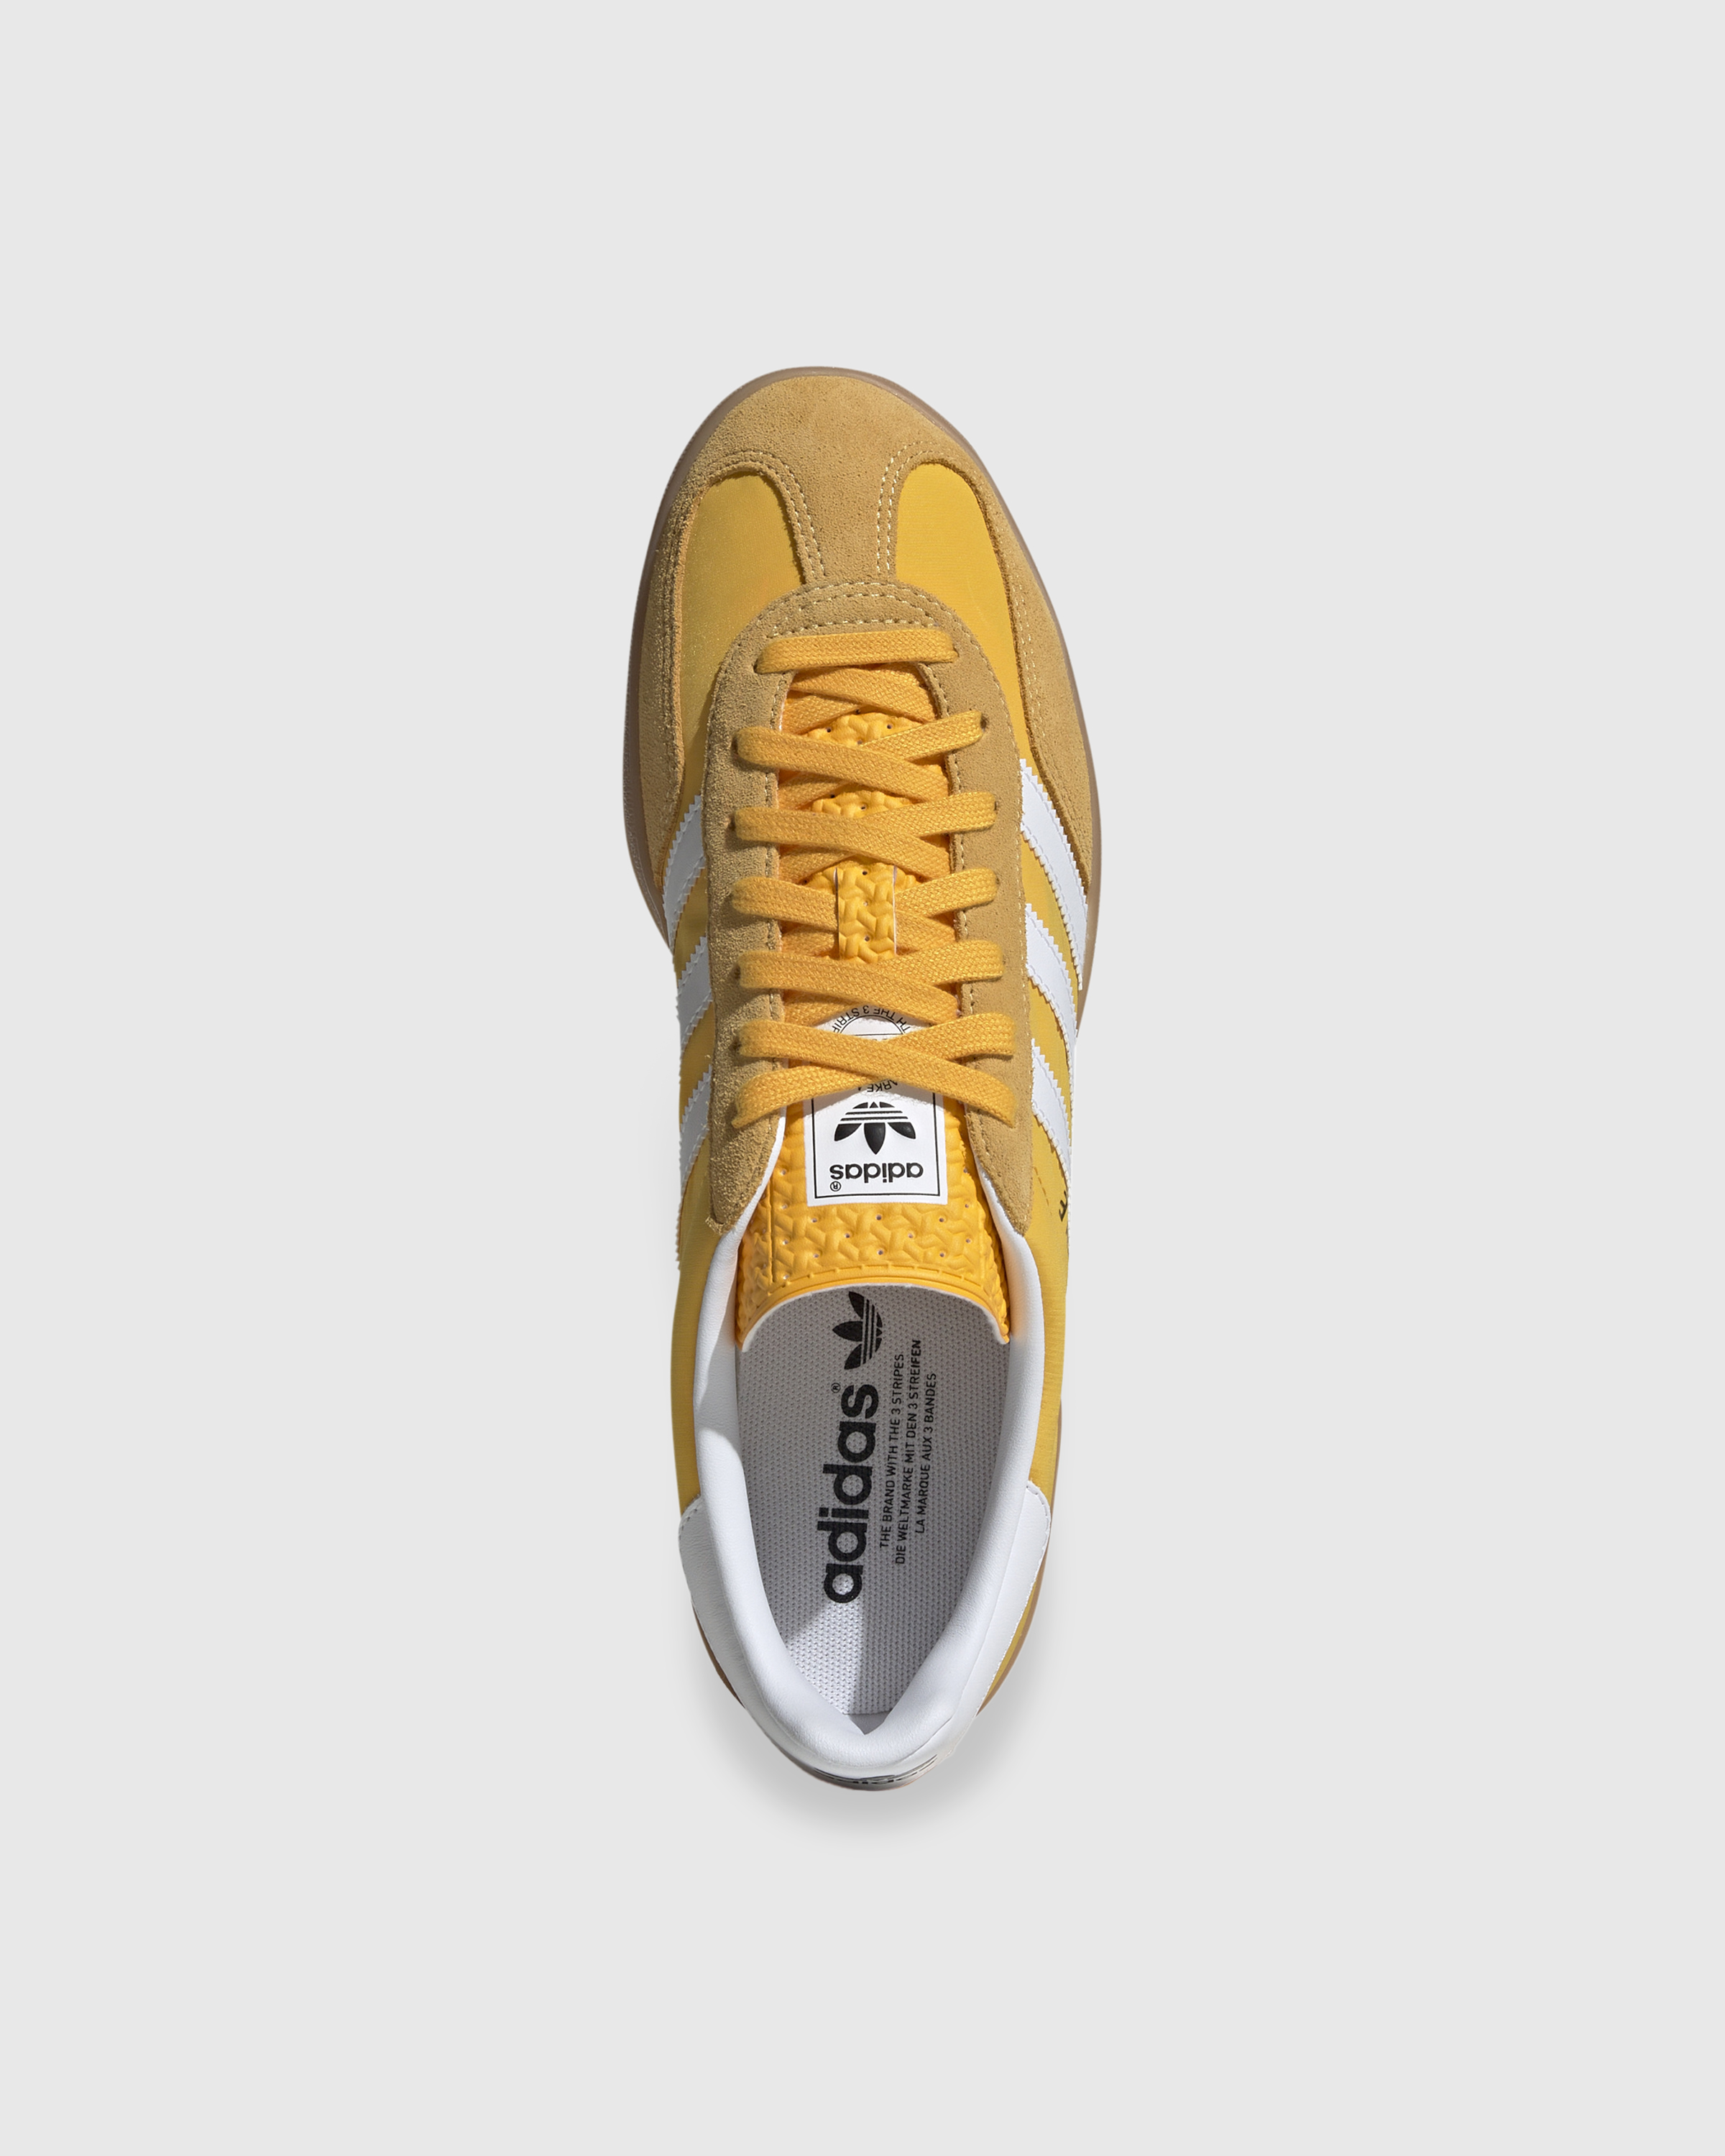 Adidas – Gazelle Indoor Yellow/White - Low Top Sneakers - Yellow - Image 5